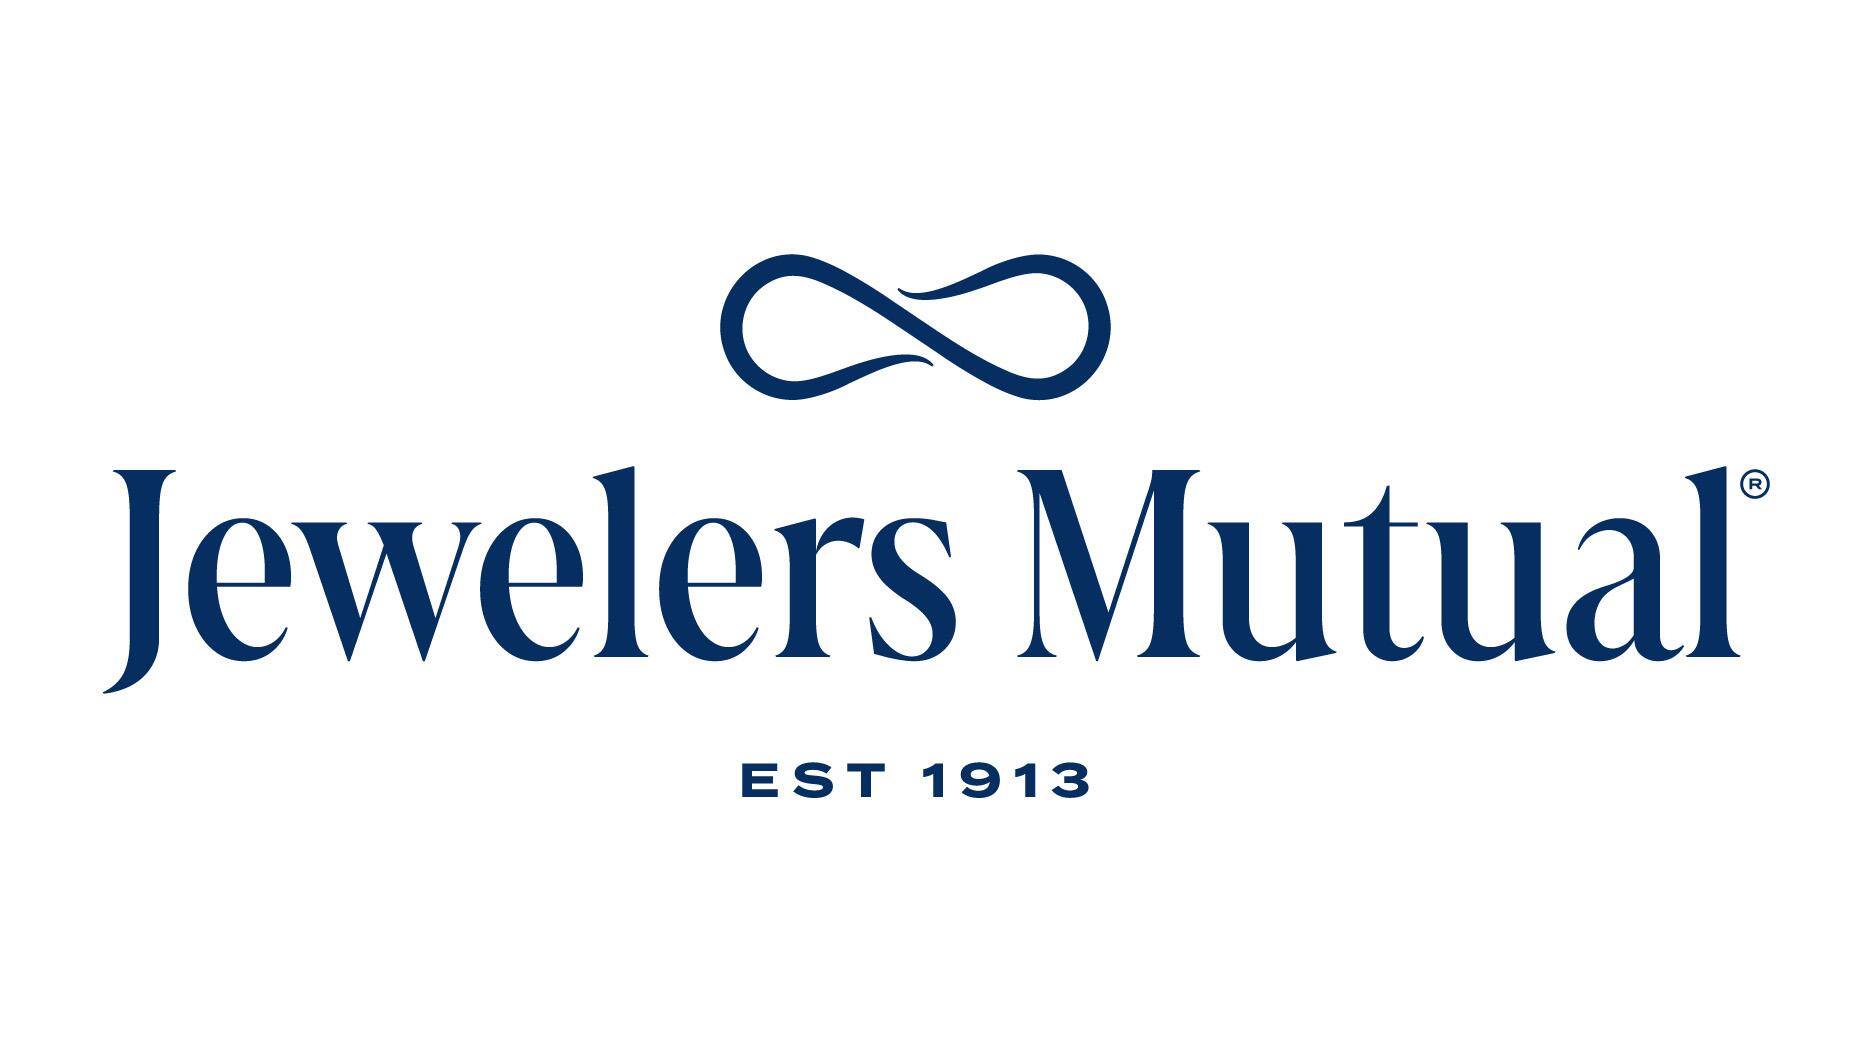 Jewelers Mutal Insurance Company Logo